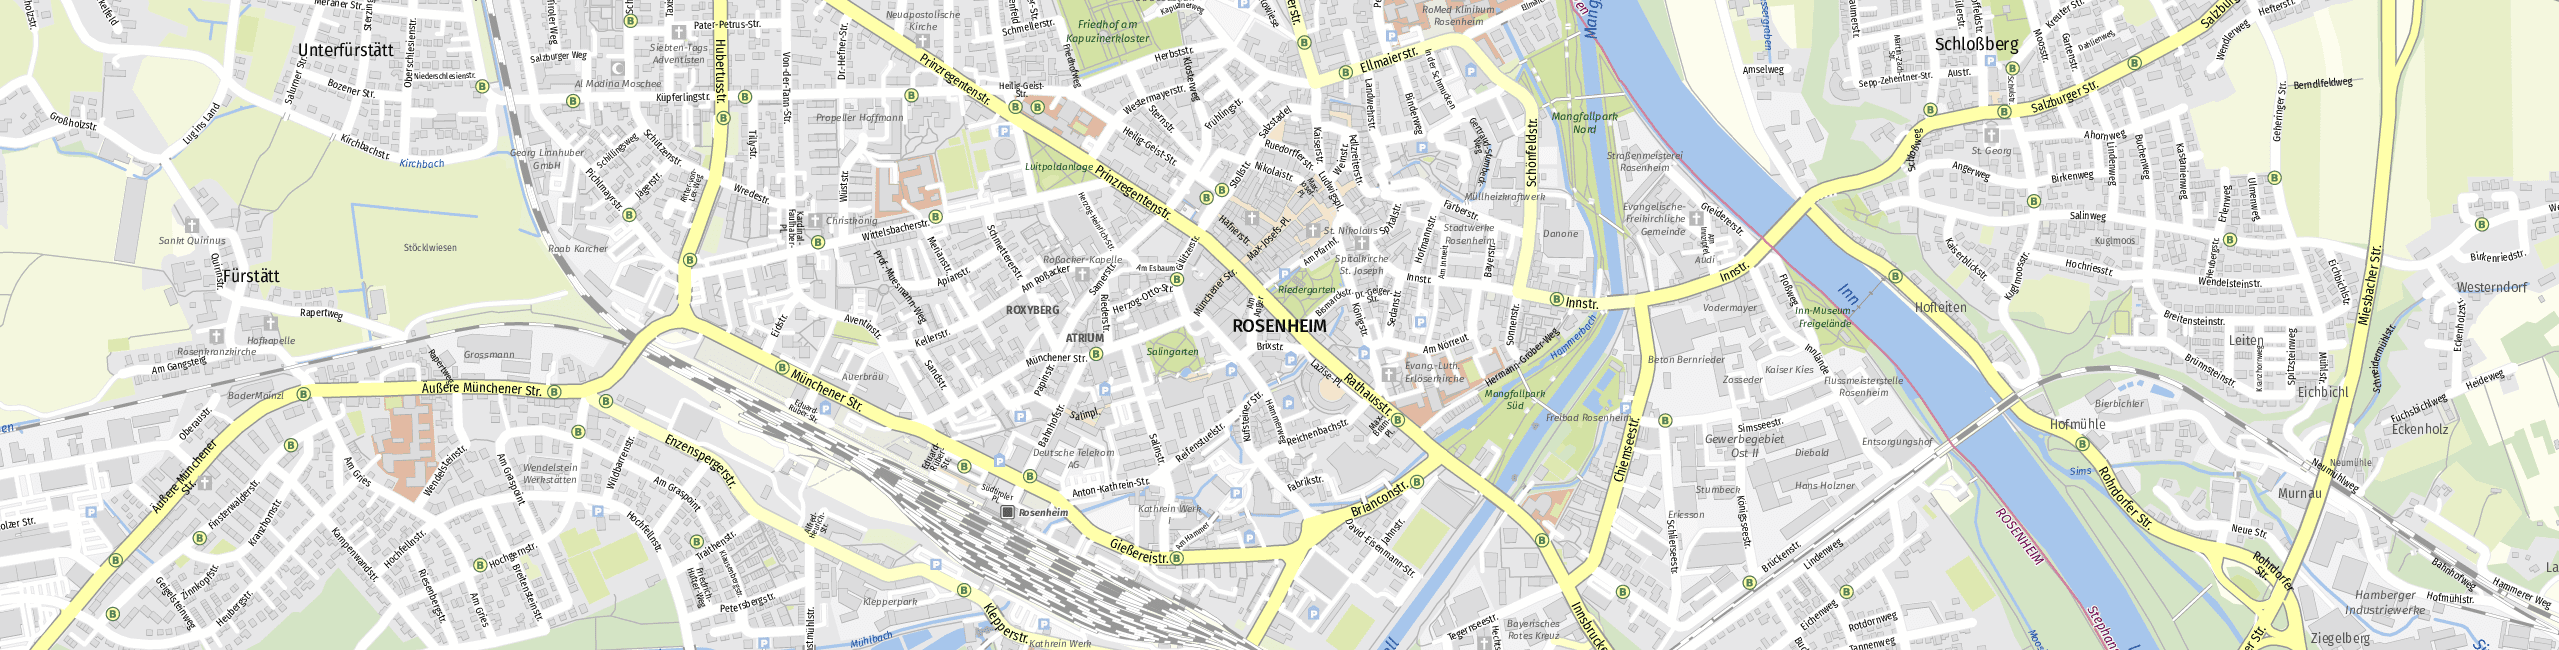 Stadtplan Rosenheim zum Downloaden.